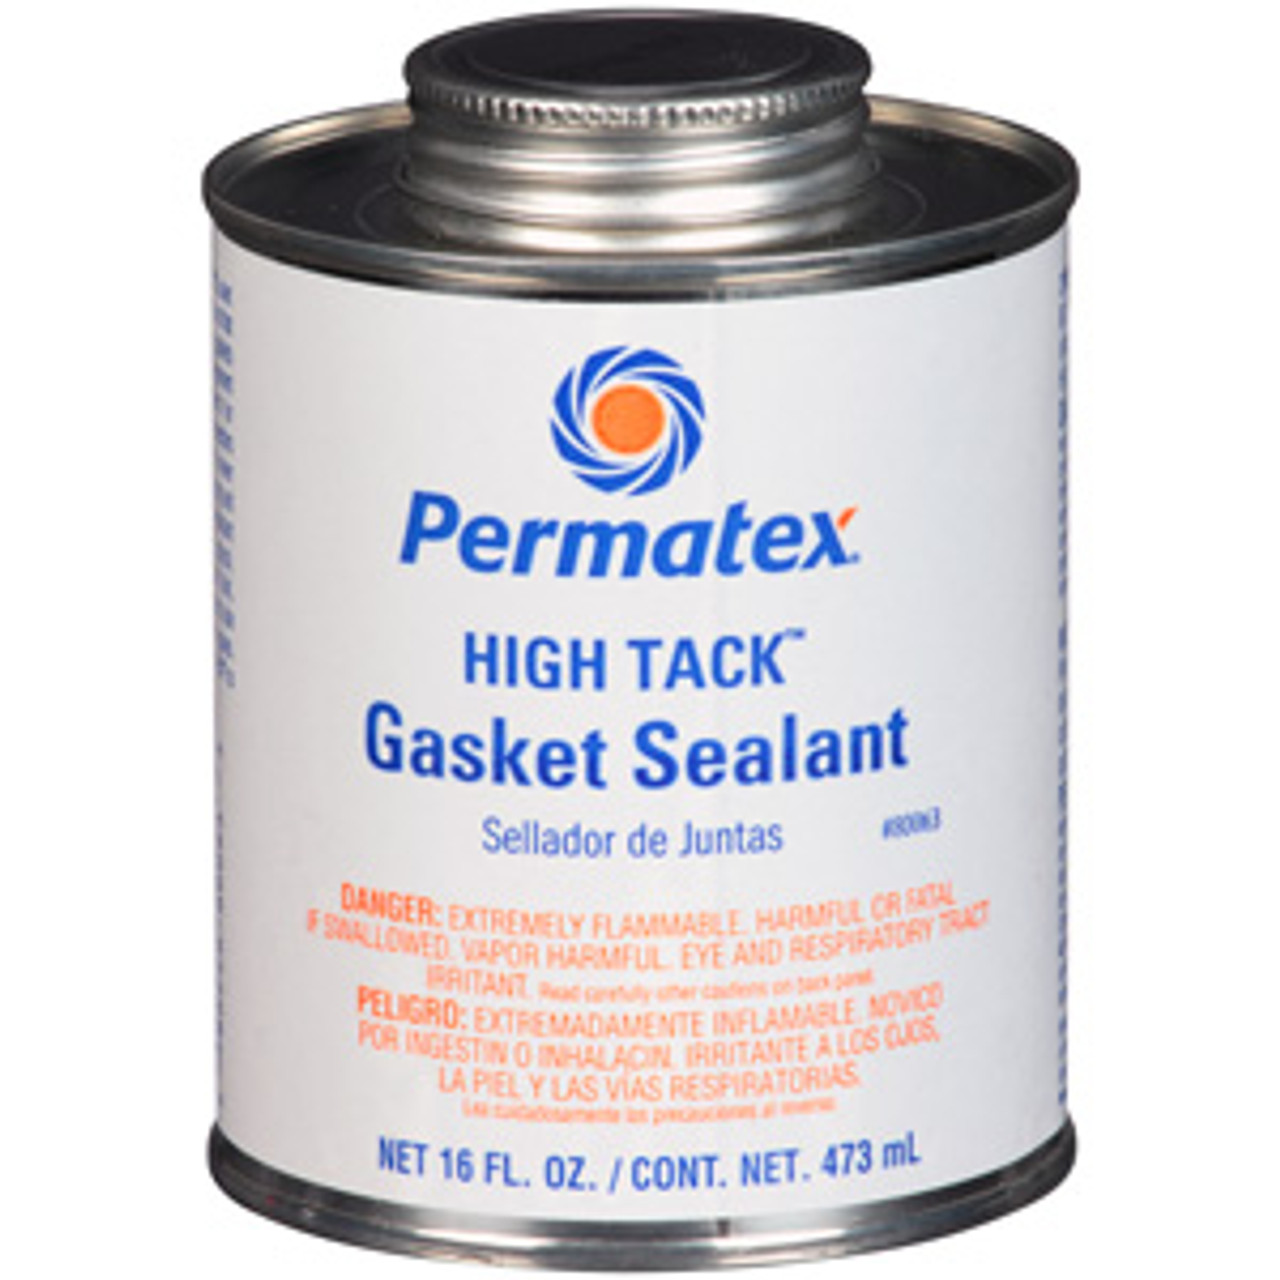 Permatex 80633 #14 Thread Sealant w/Teflon - Each